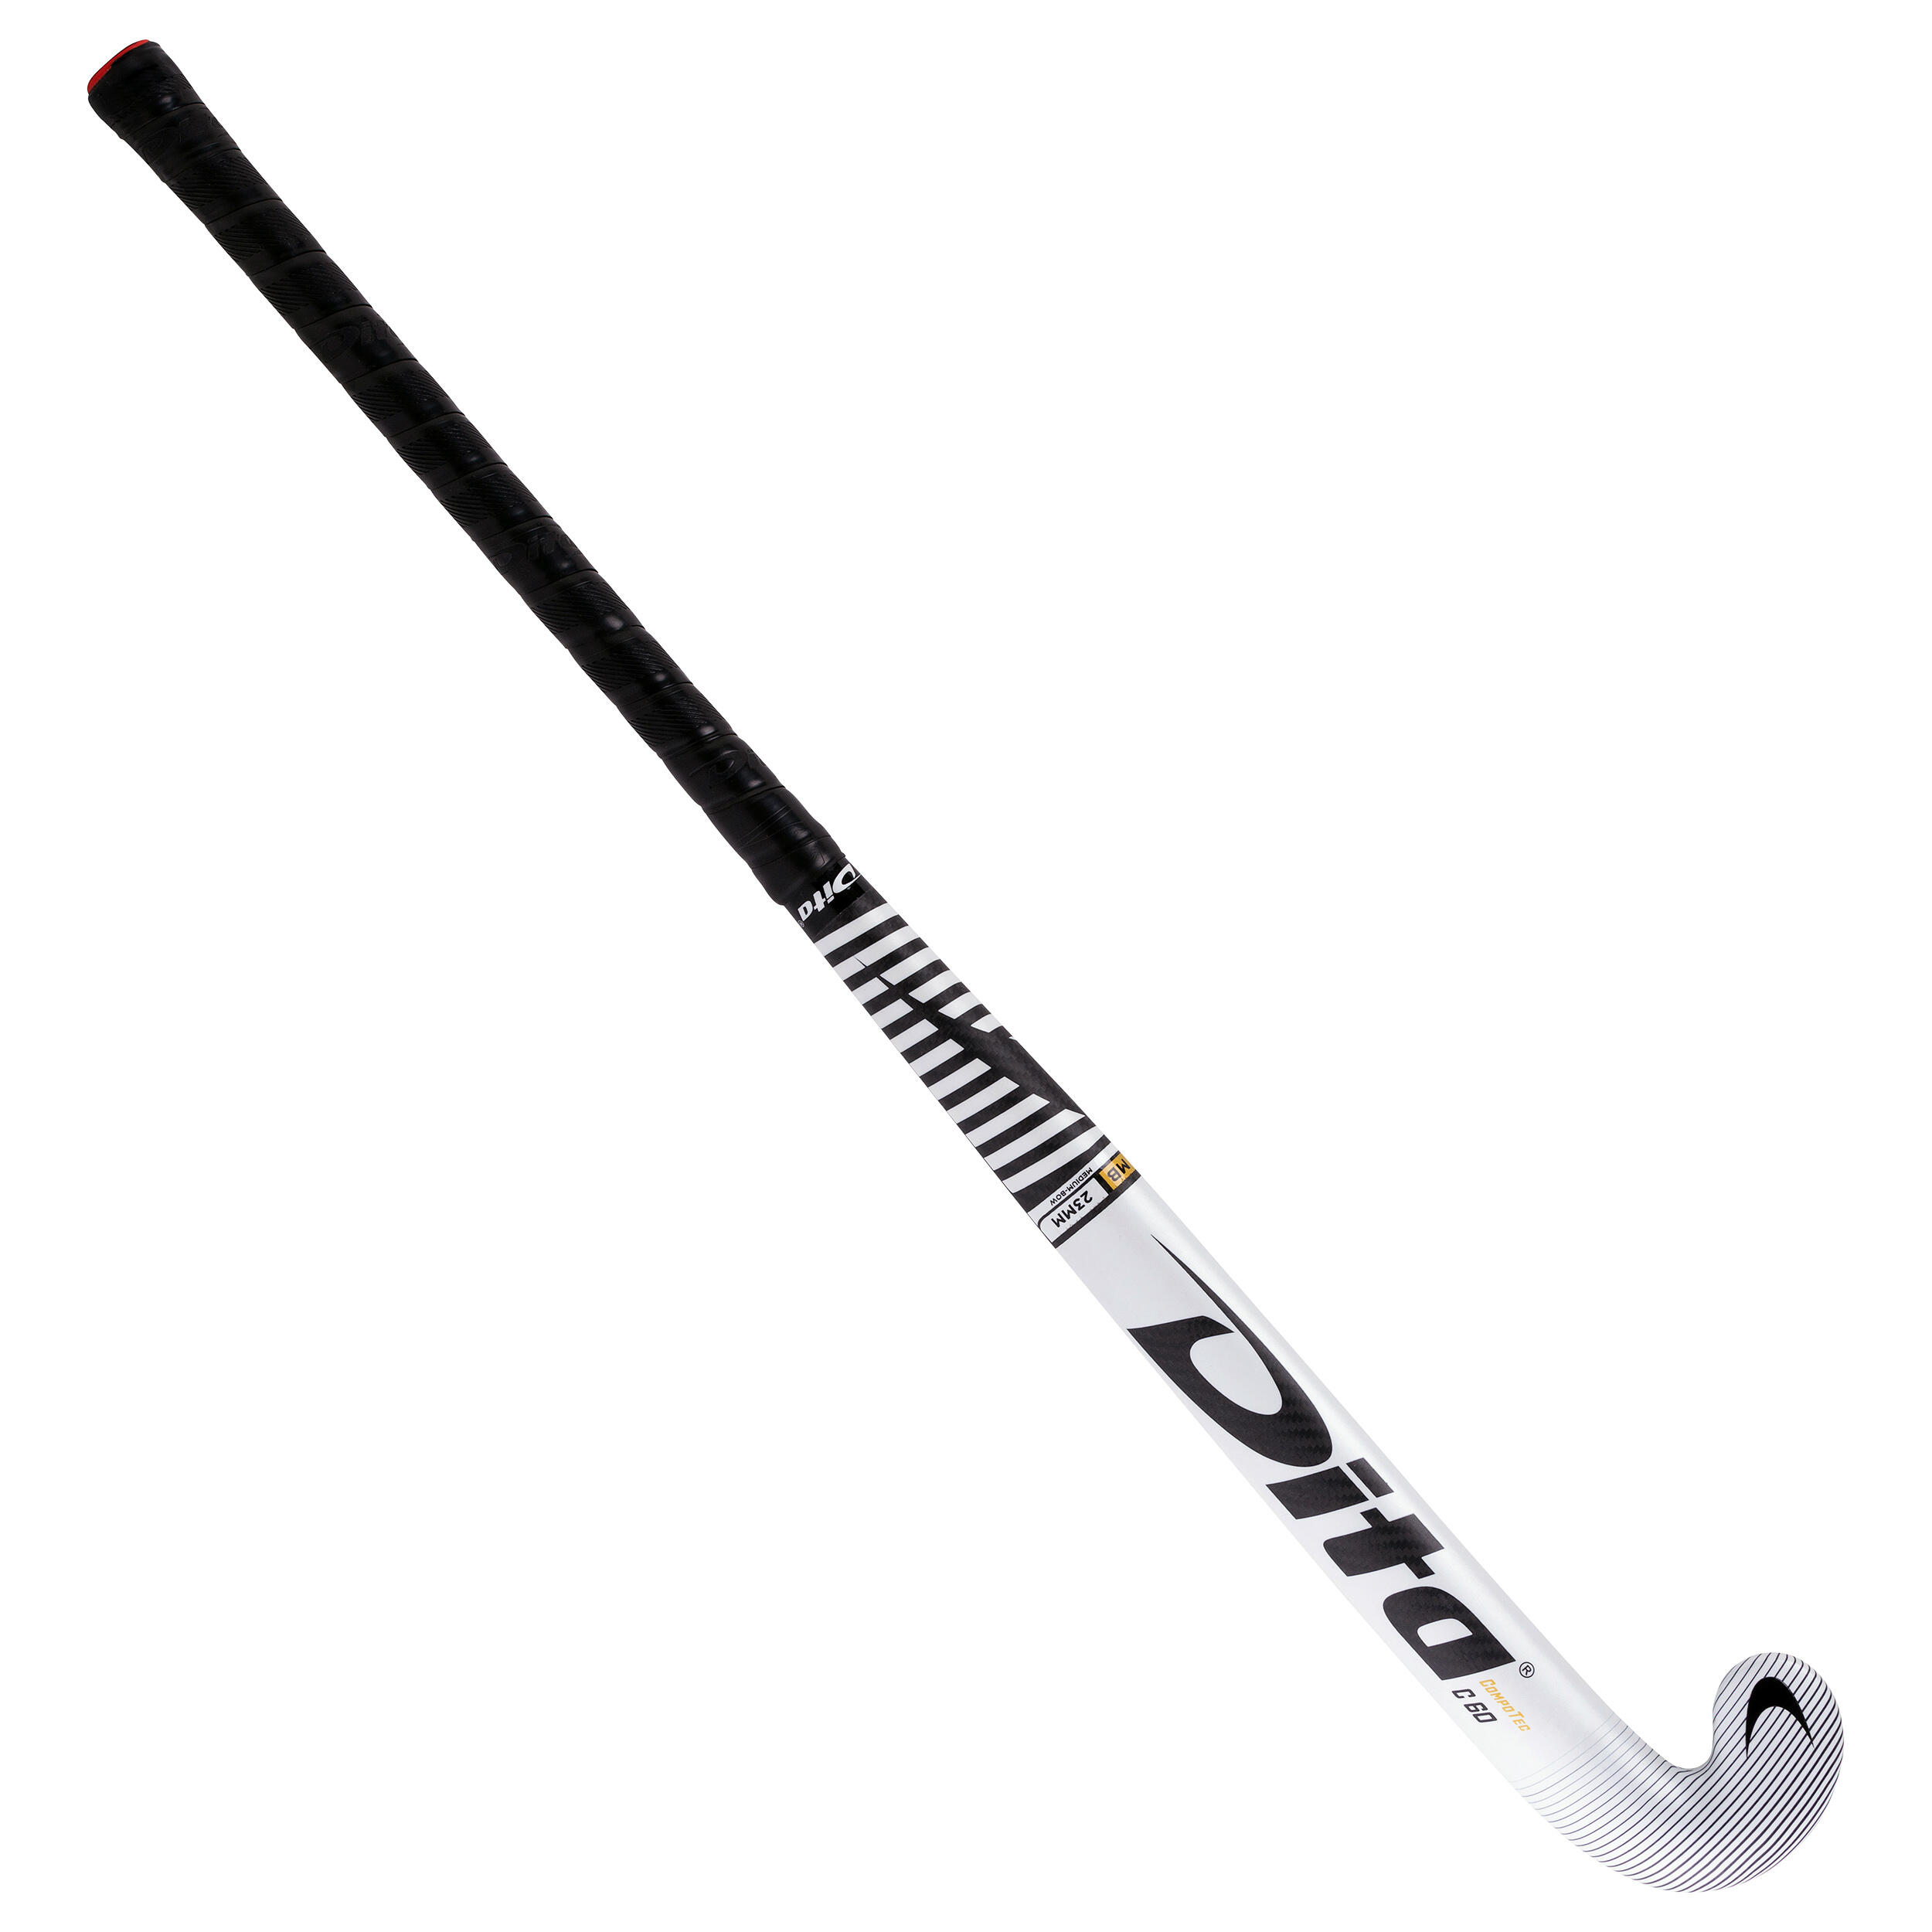 Adult Intermediate 60% Carbon Mid Bow Field Hockey Stick CompotecC60 - White/Black 8/12